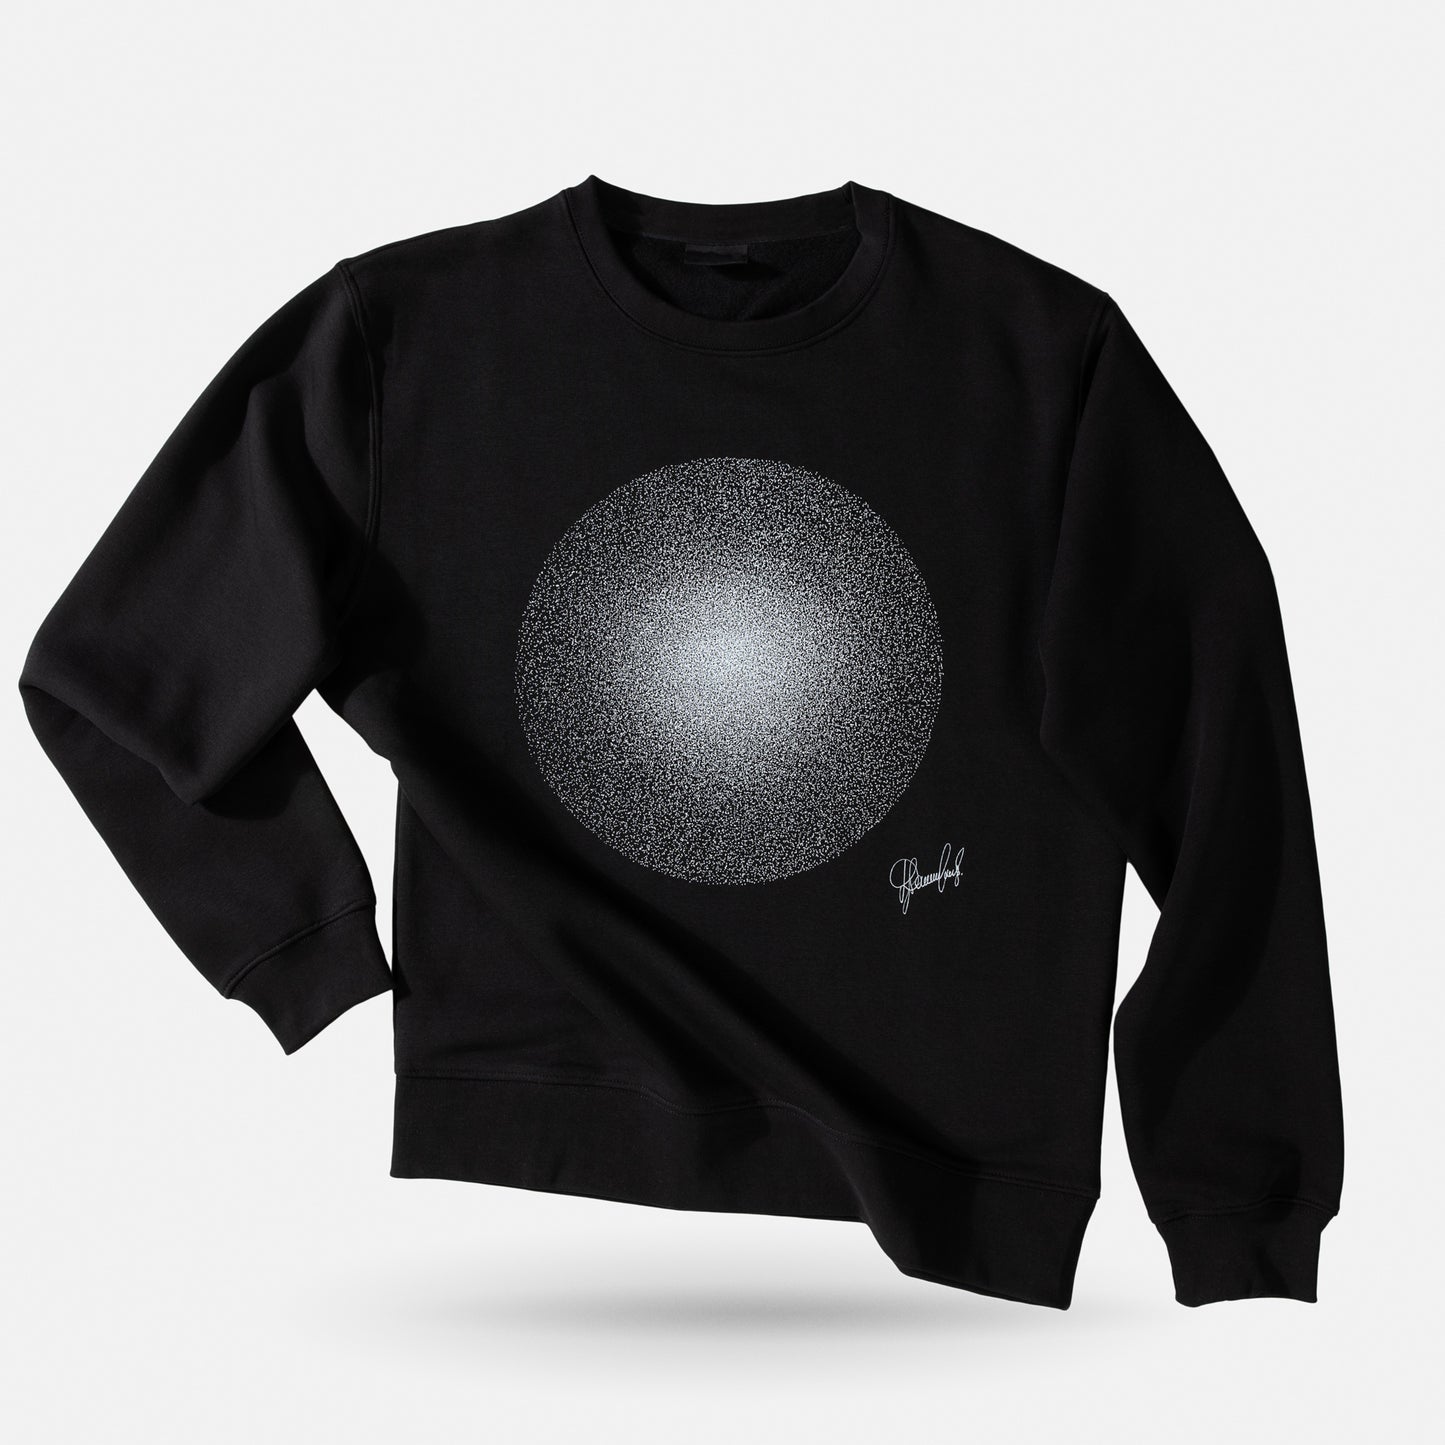 Artwork crewneck sweatshirt / Tiny things